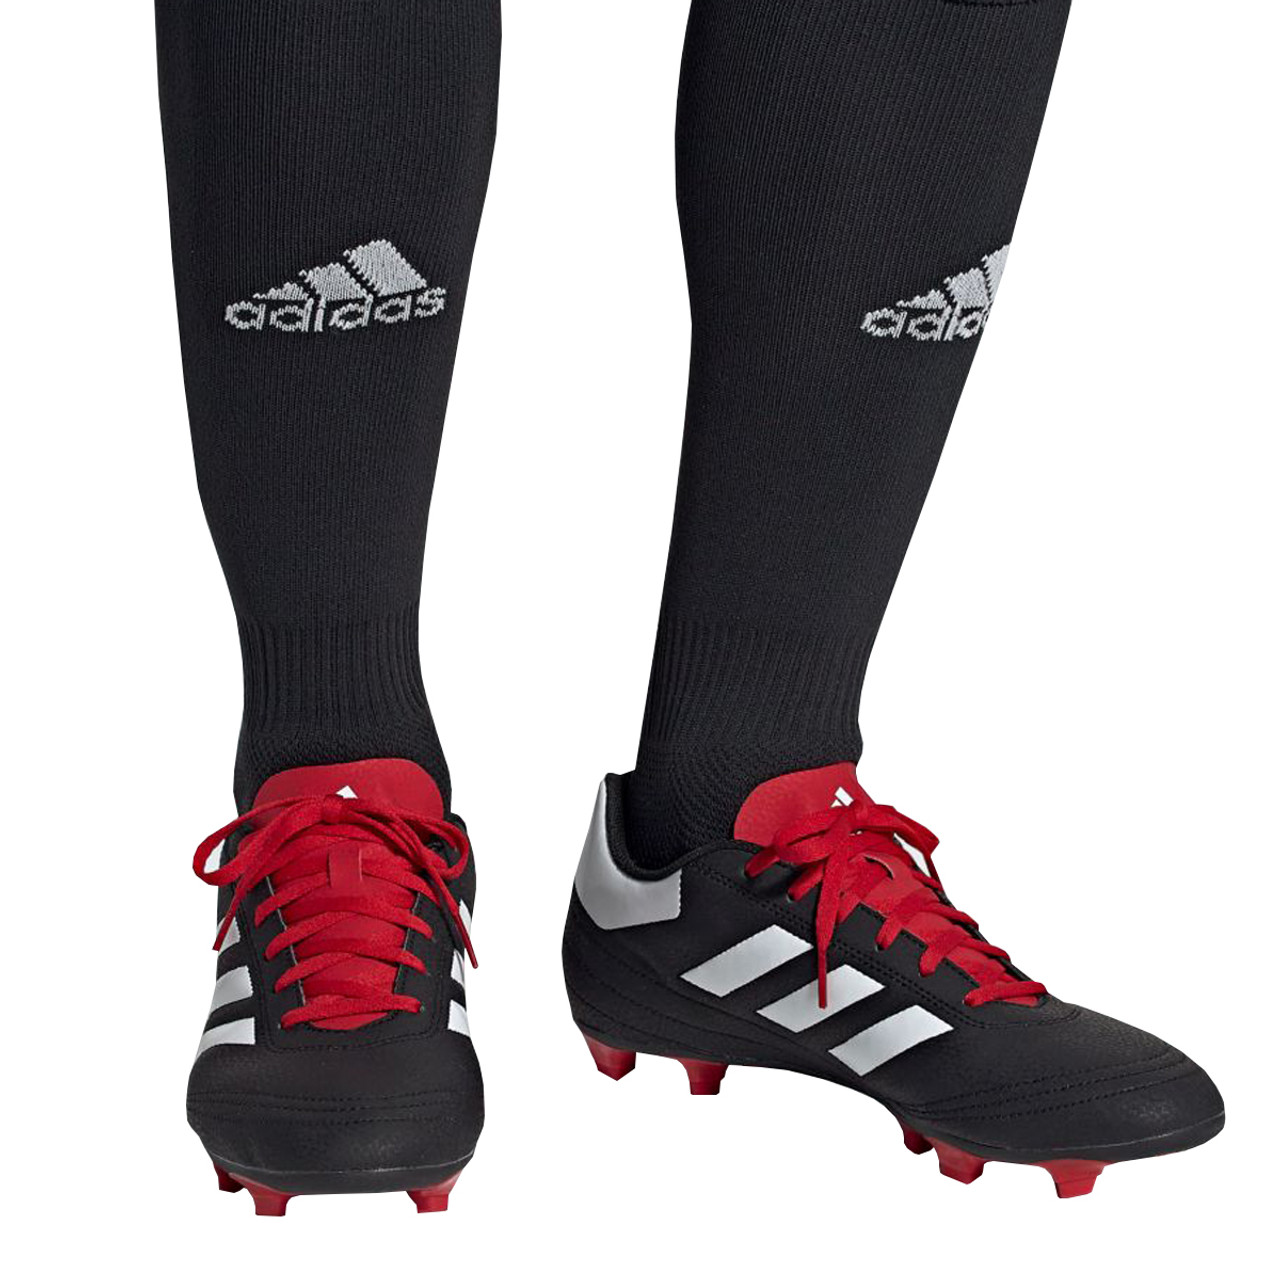 Adidas Goletto Vi Fg Men S Soccer Cleats G26366 Black White Red